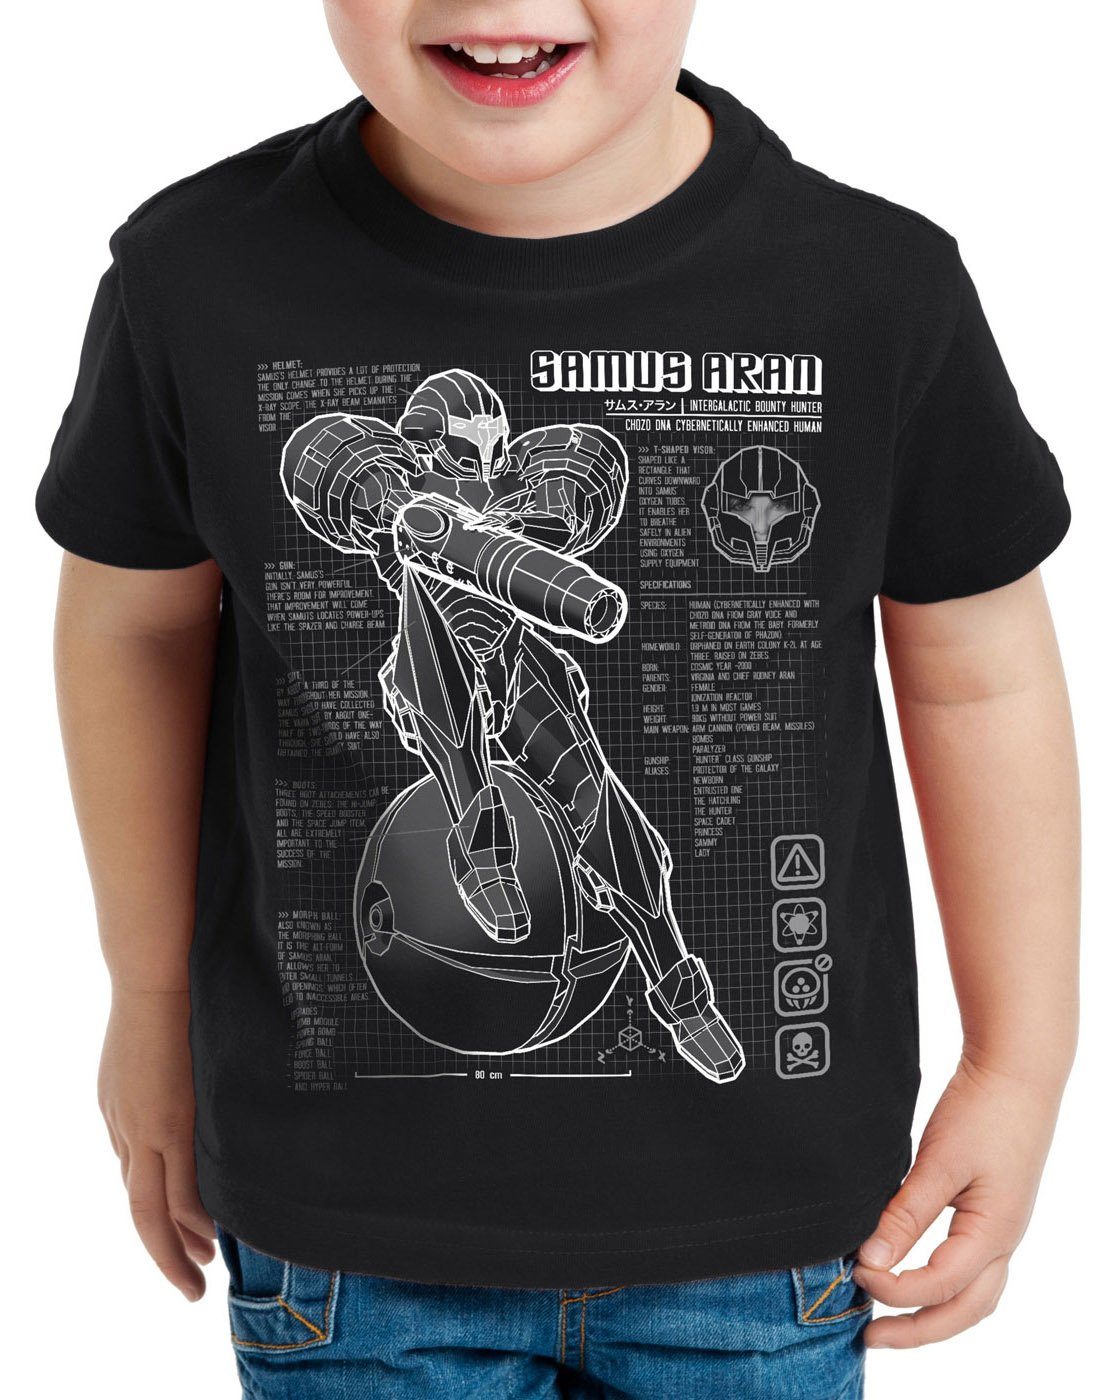 Kinder nerd switch Print-Shirt gamer T-Shirt style3 metroid Samus schwarz nes snes Blaupause